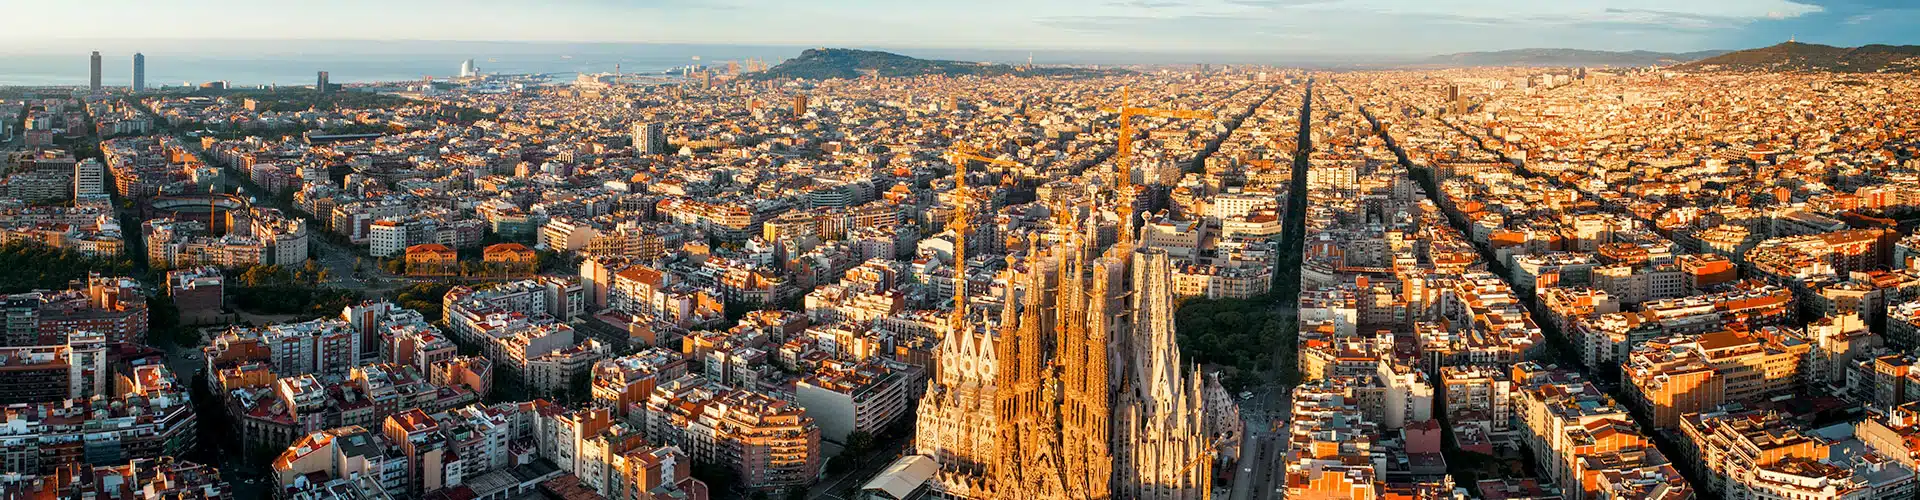 barcelona panorama view